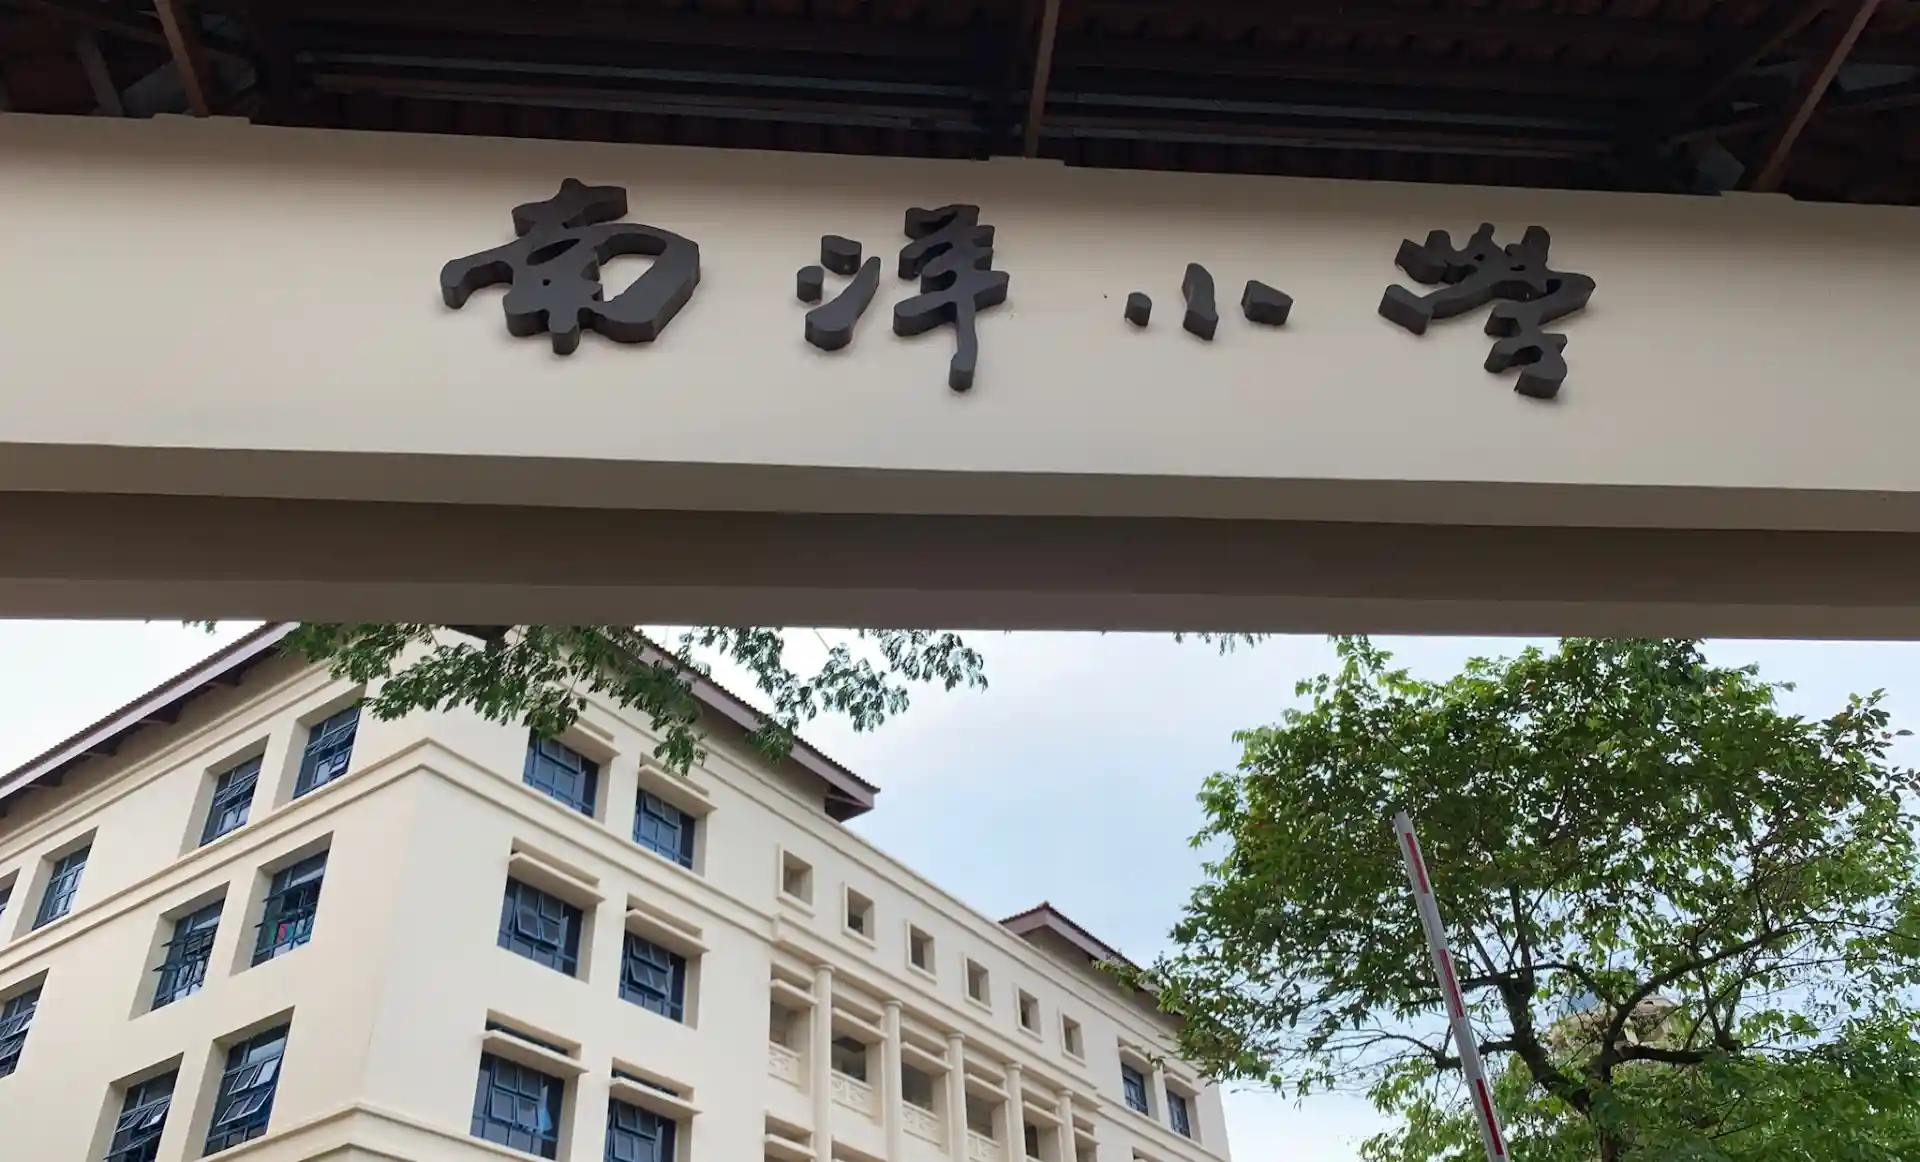 Watten Estate Condo is 1km from Nanyang Primary 南洋小学